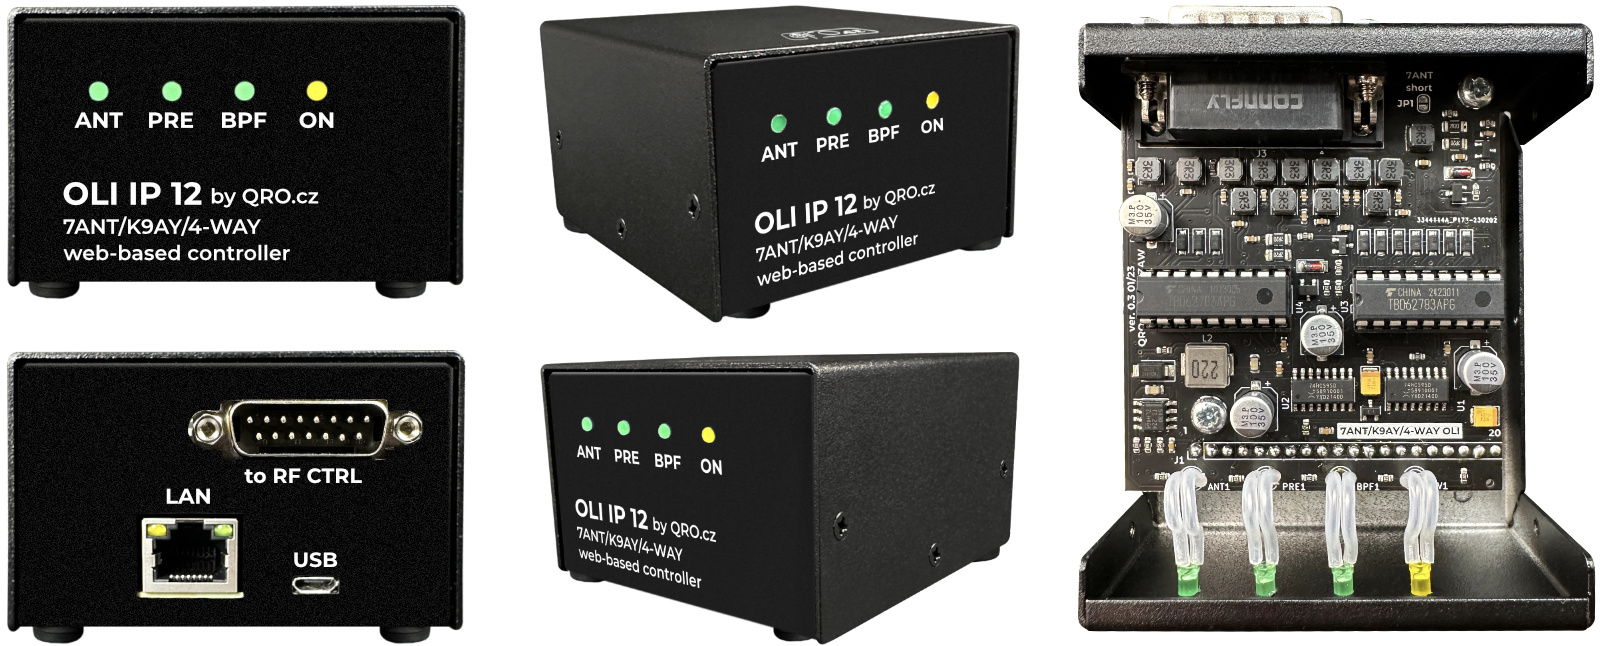 oli ip 12 remote controller by qro.cz hamparts.shop